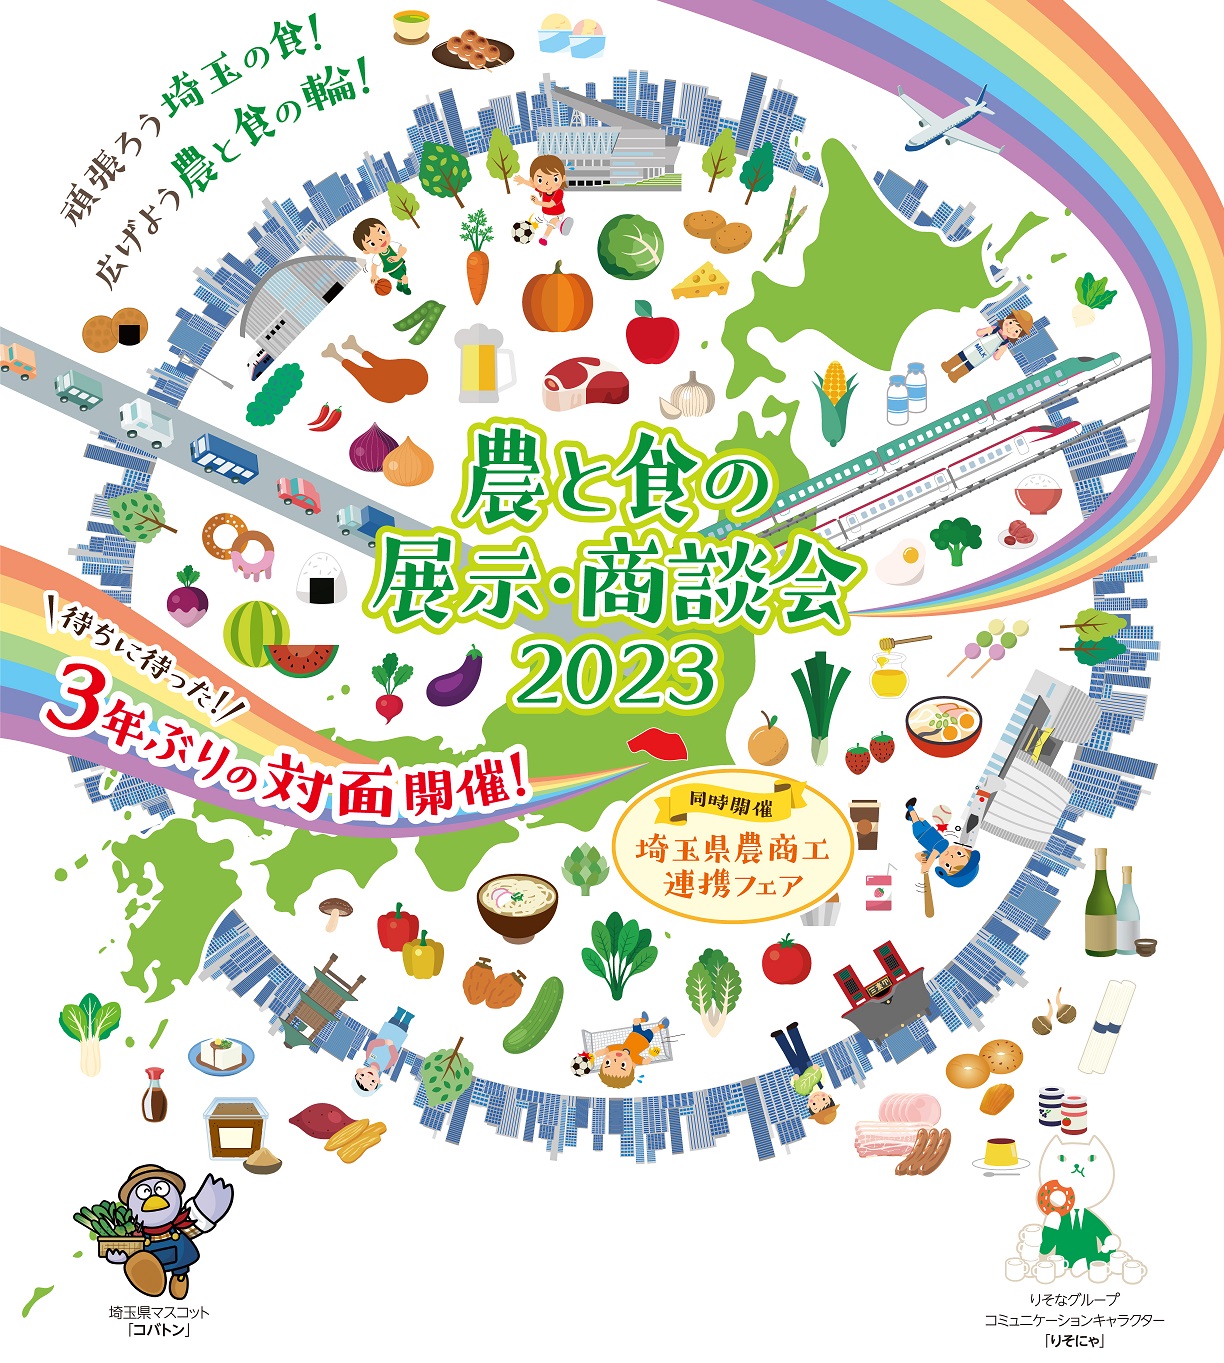 「農と食の展示・商談会2023」「埼玉県農商工連携フェア」